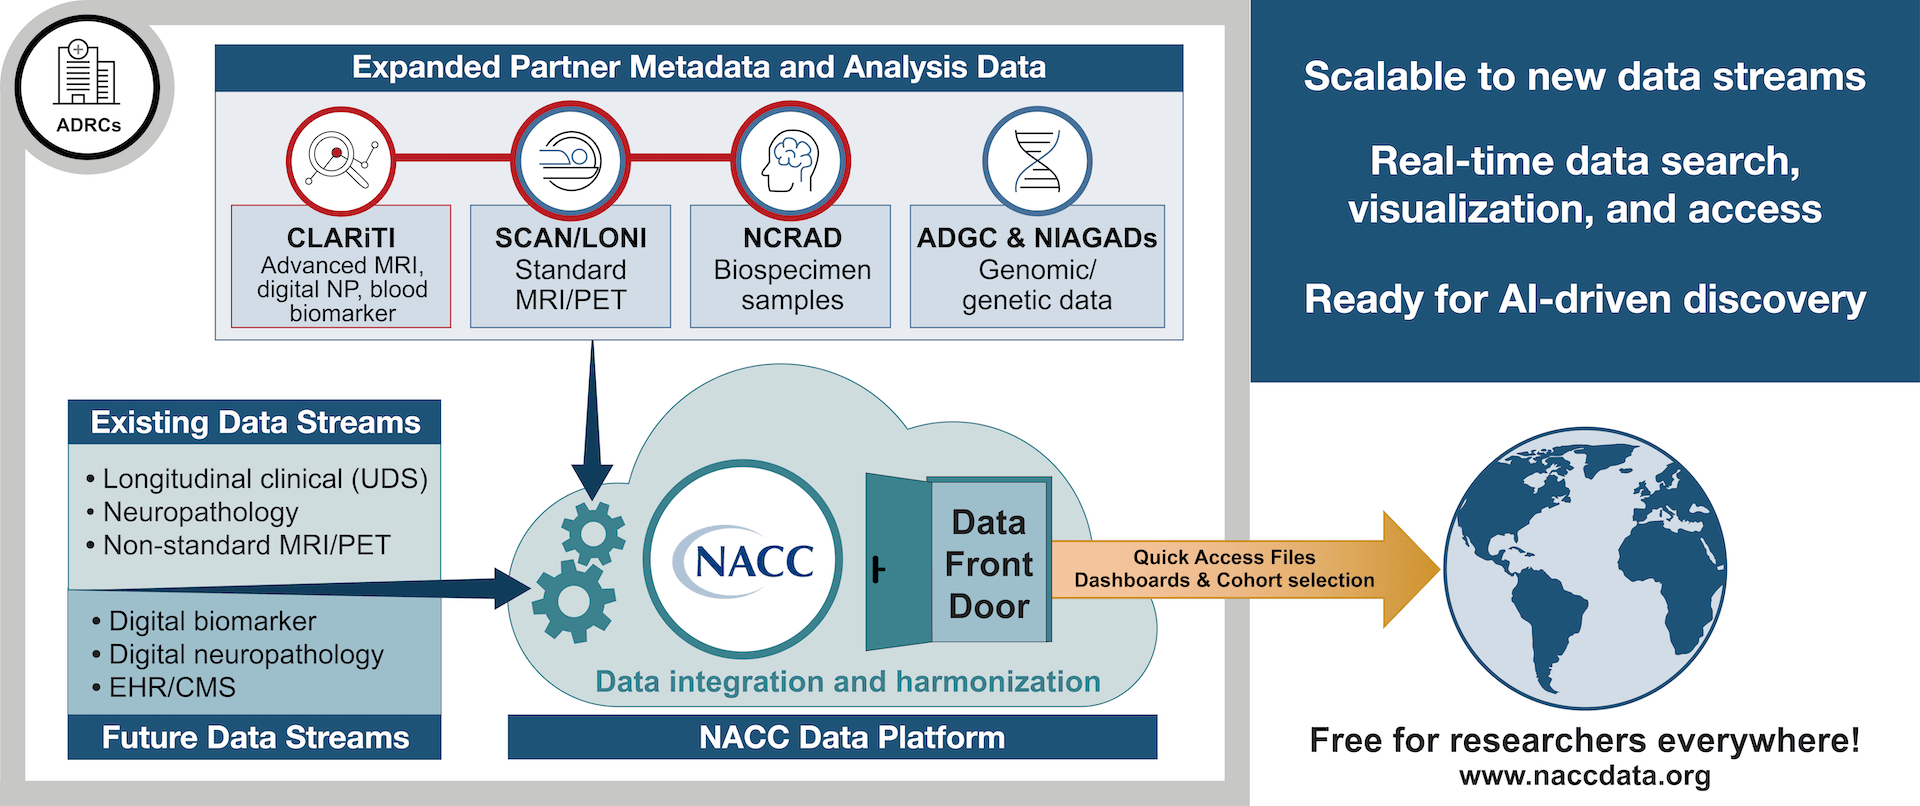 NACC Data Platform